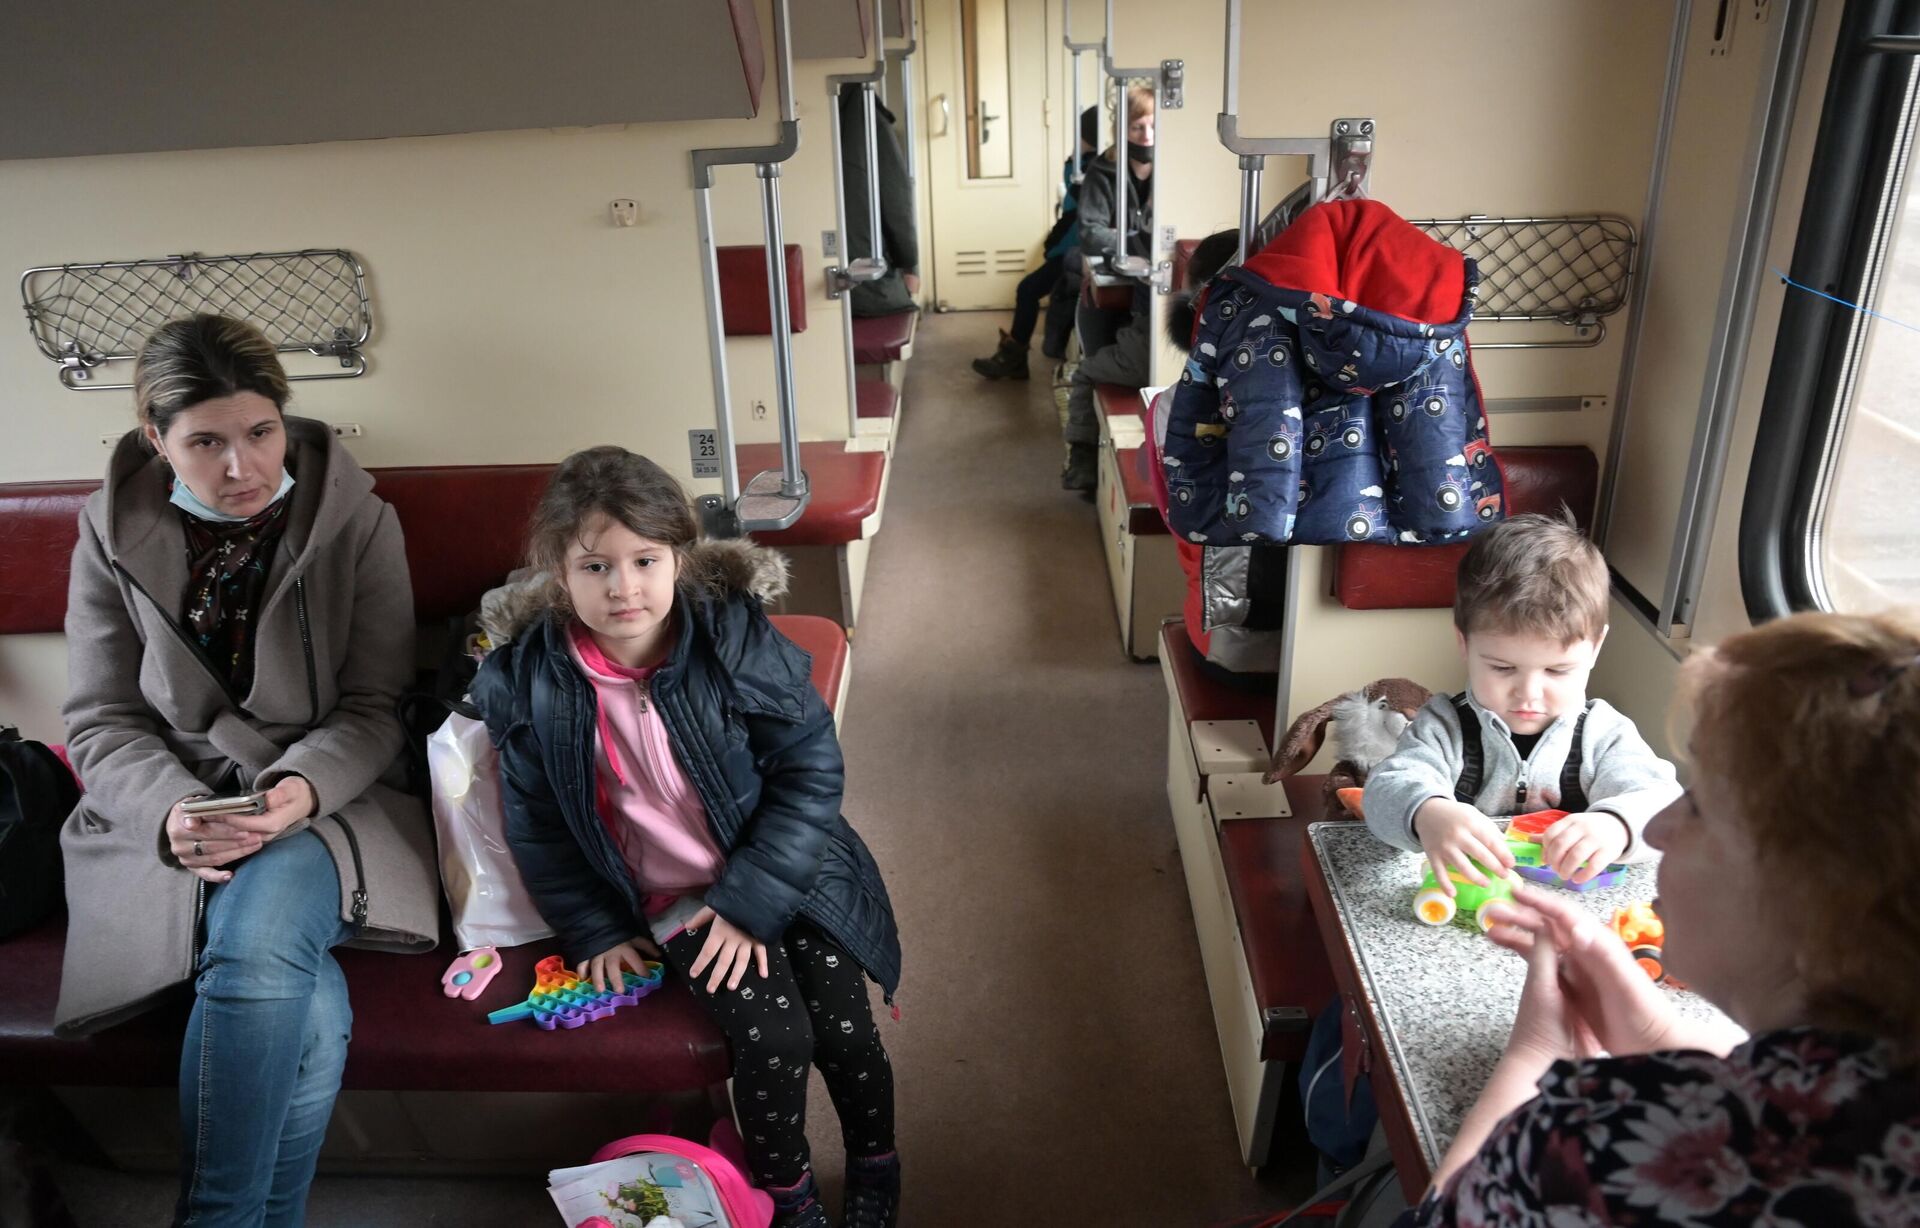 Donetsk People's Republic residents seen inside a train at Donetsk-2 station during evacuation to Russia's Rostov Oblast - Sputnik International, 1920, 20.02.2022